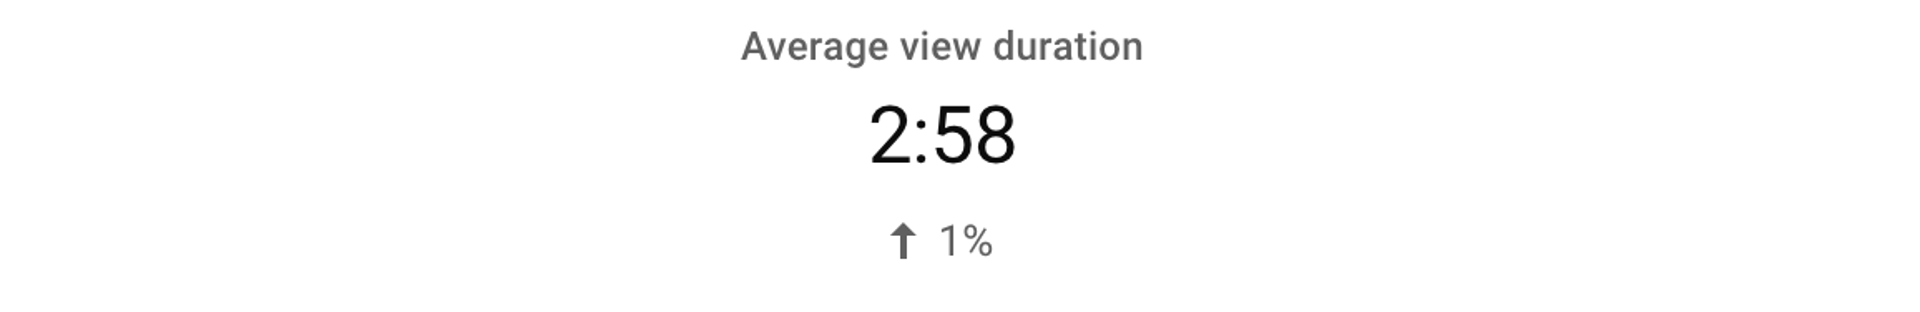 You Tube Analytics Average View Duration Metric